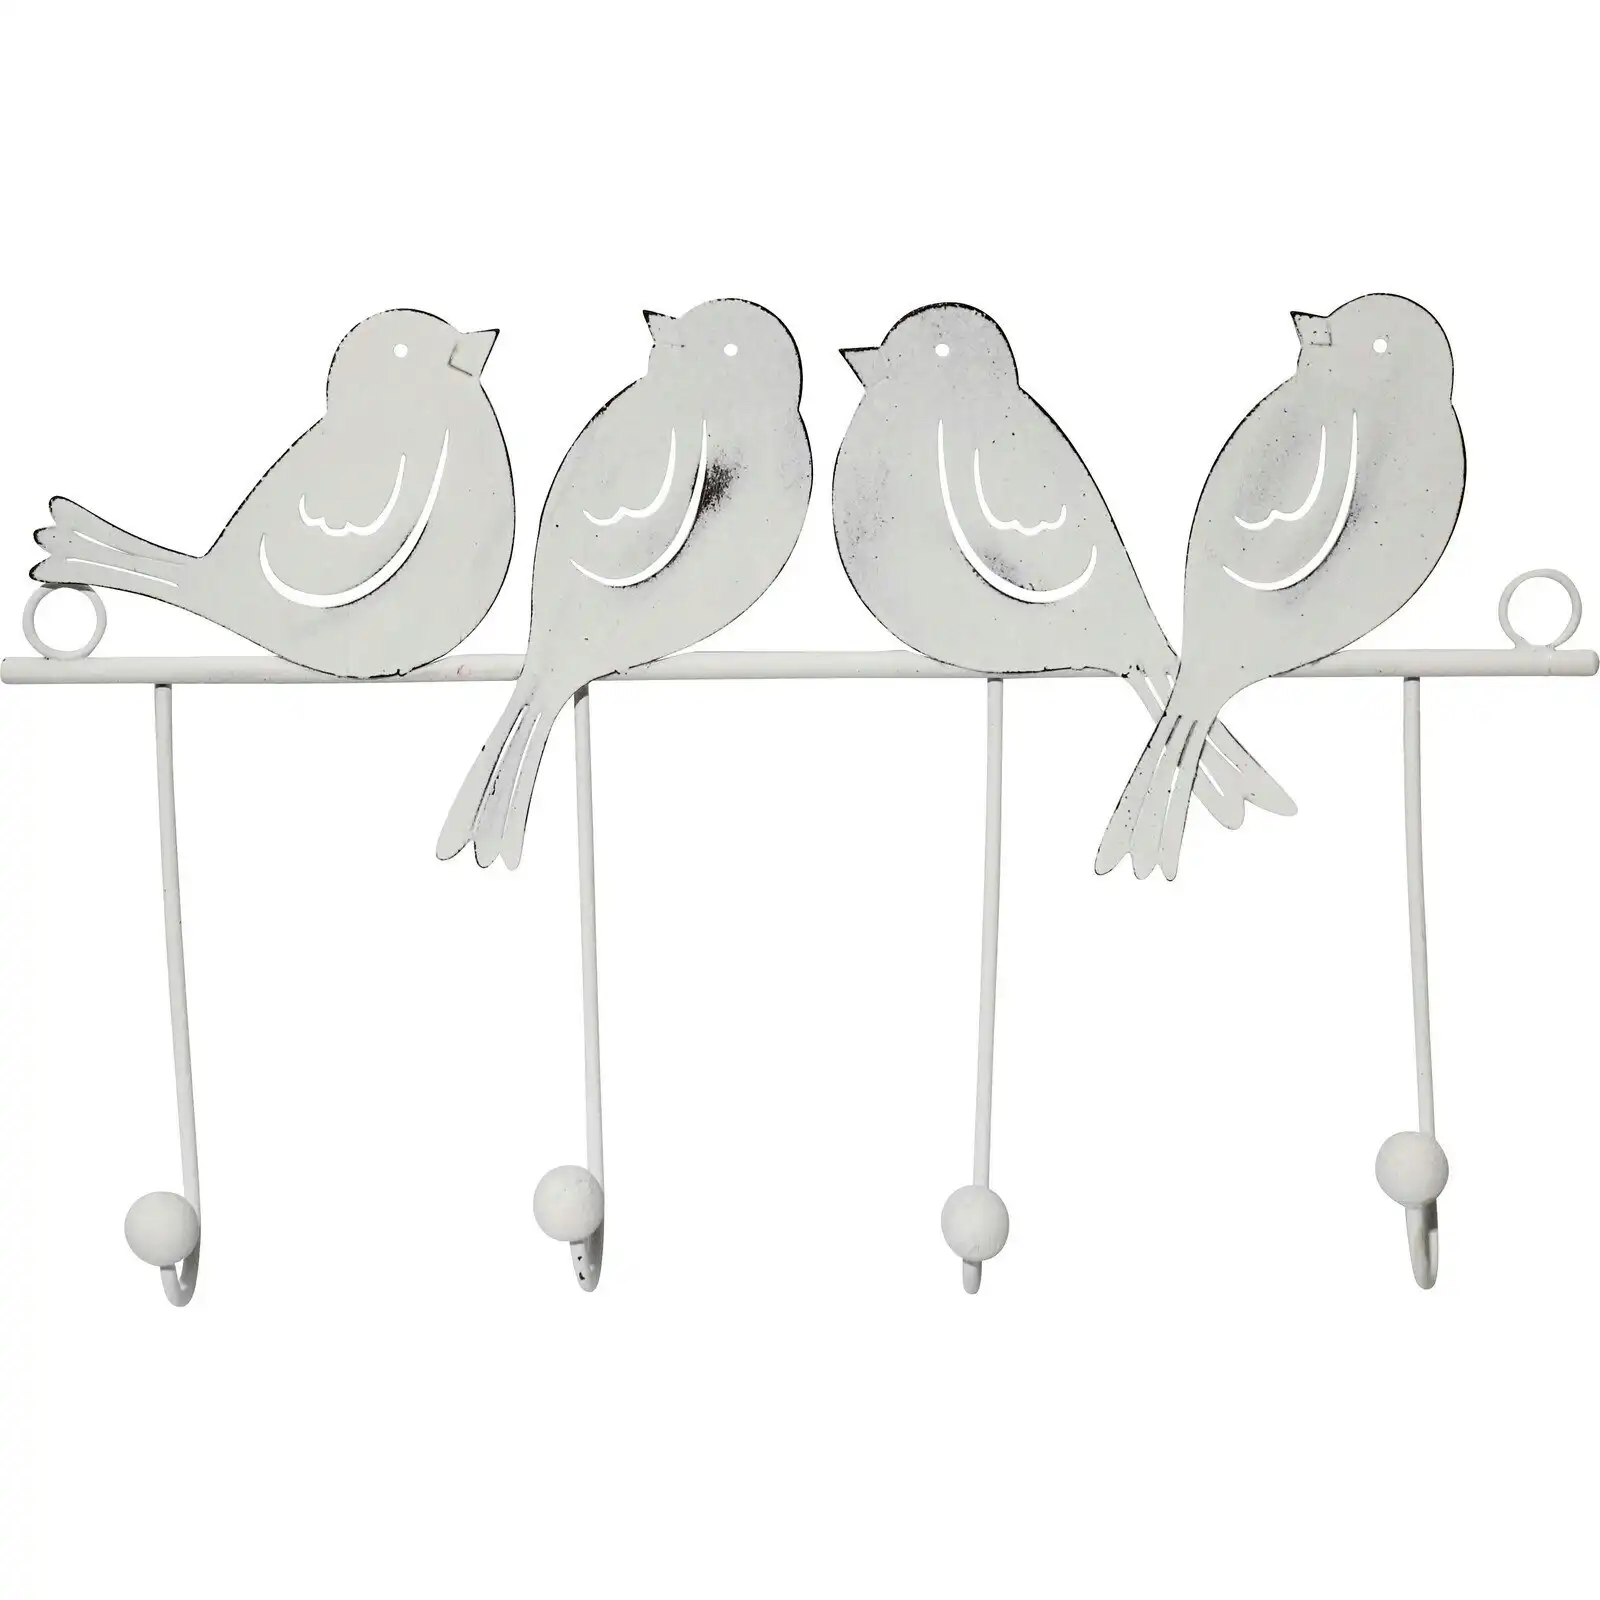 Bird Hooks Metal 30.5cm Wall Mounted Clothes/Key Hanger/Storage Holder Organiser